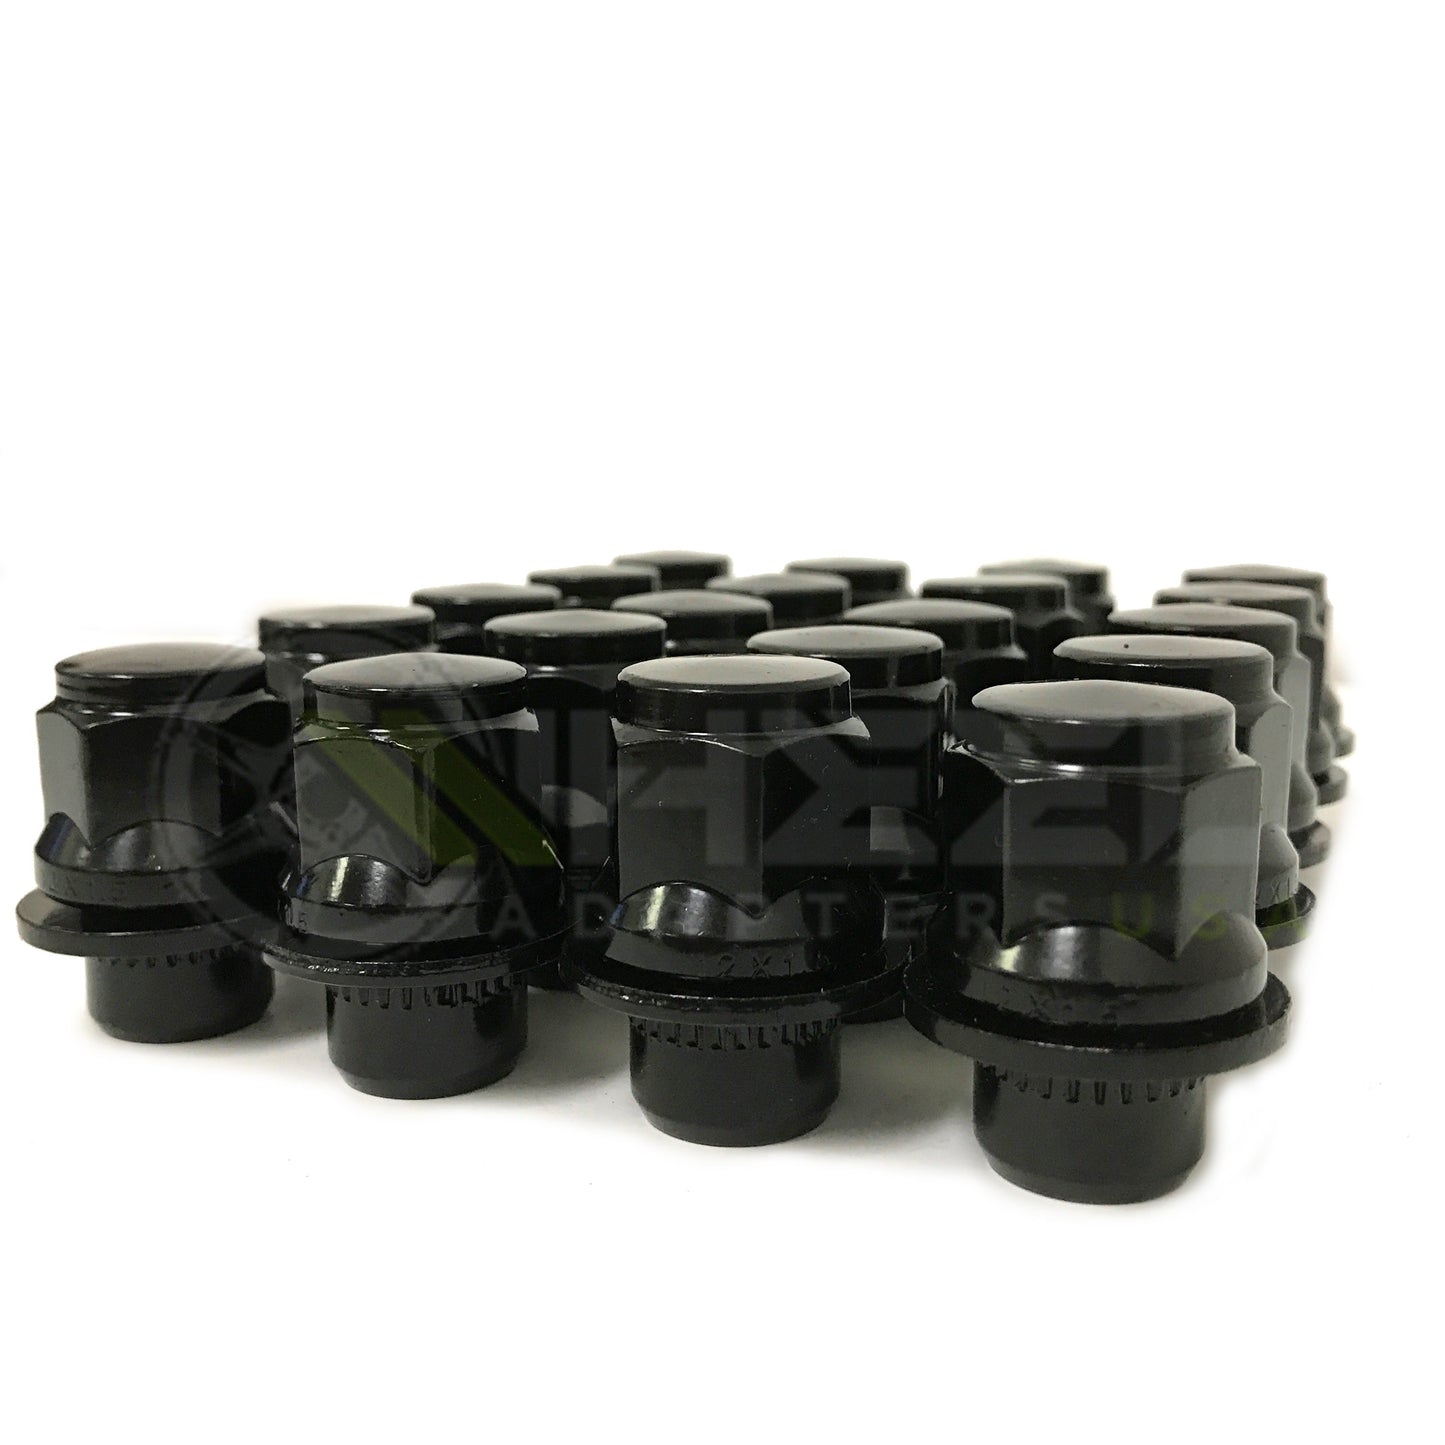 24 Toyota OEM Mag Lug Nuts Set Fits All 6 Lug Mag Wheels / Rims 6x5.5 Or 6x139.7 Tacoma, 4Runner, FJ Cruiser, Tundra, Wheel Lugs